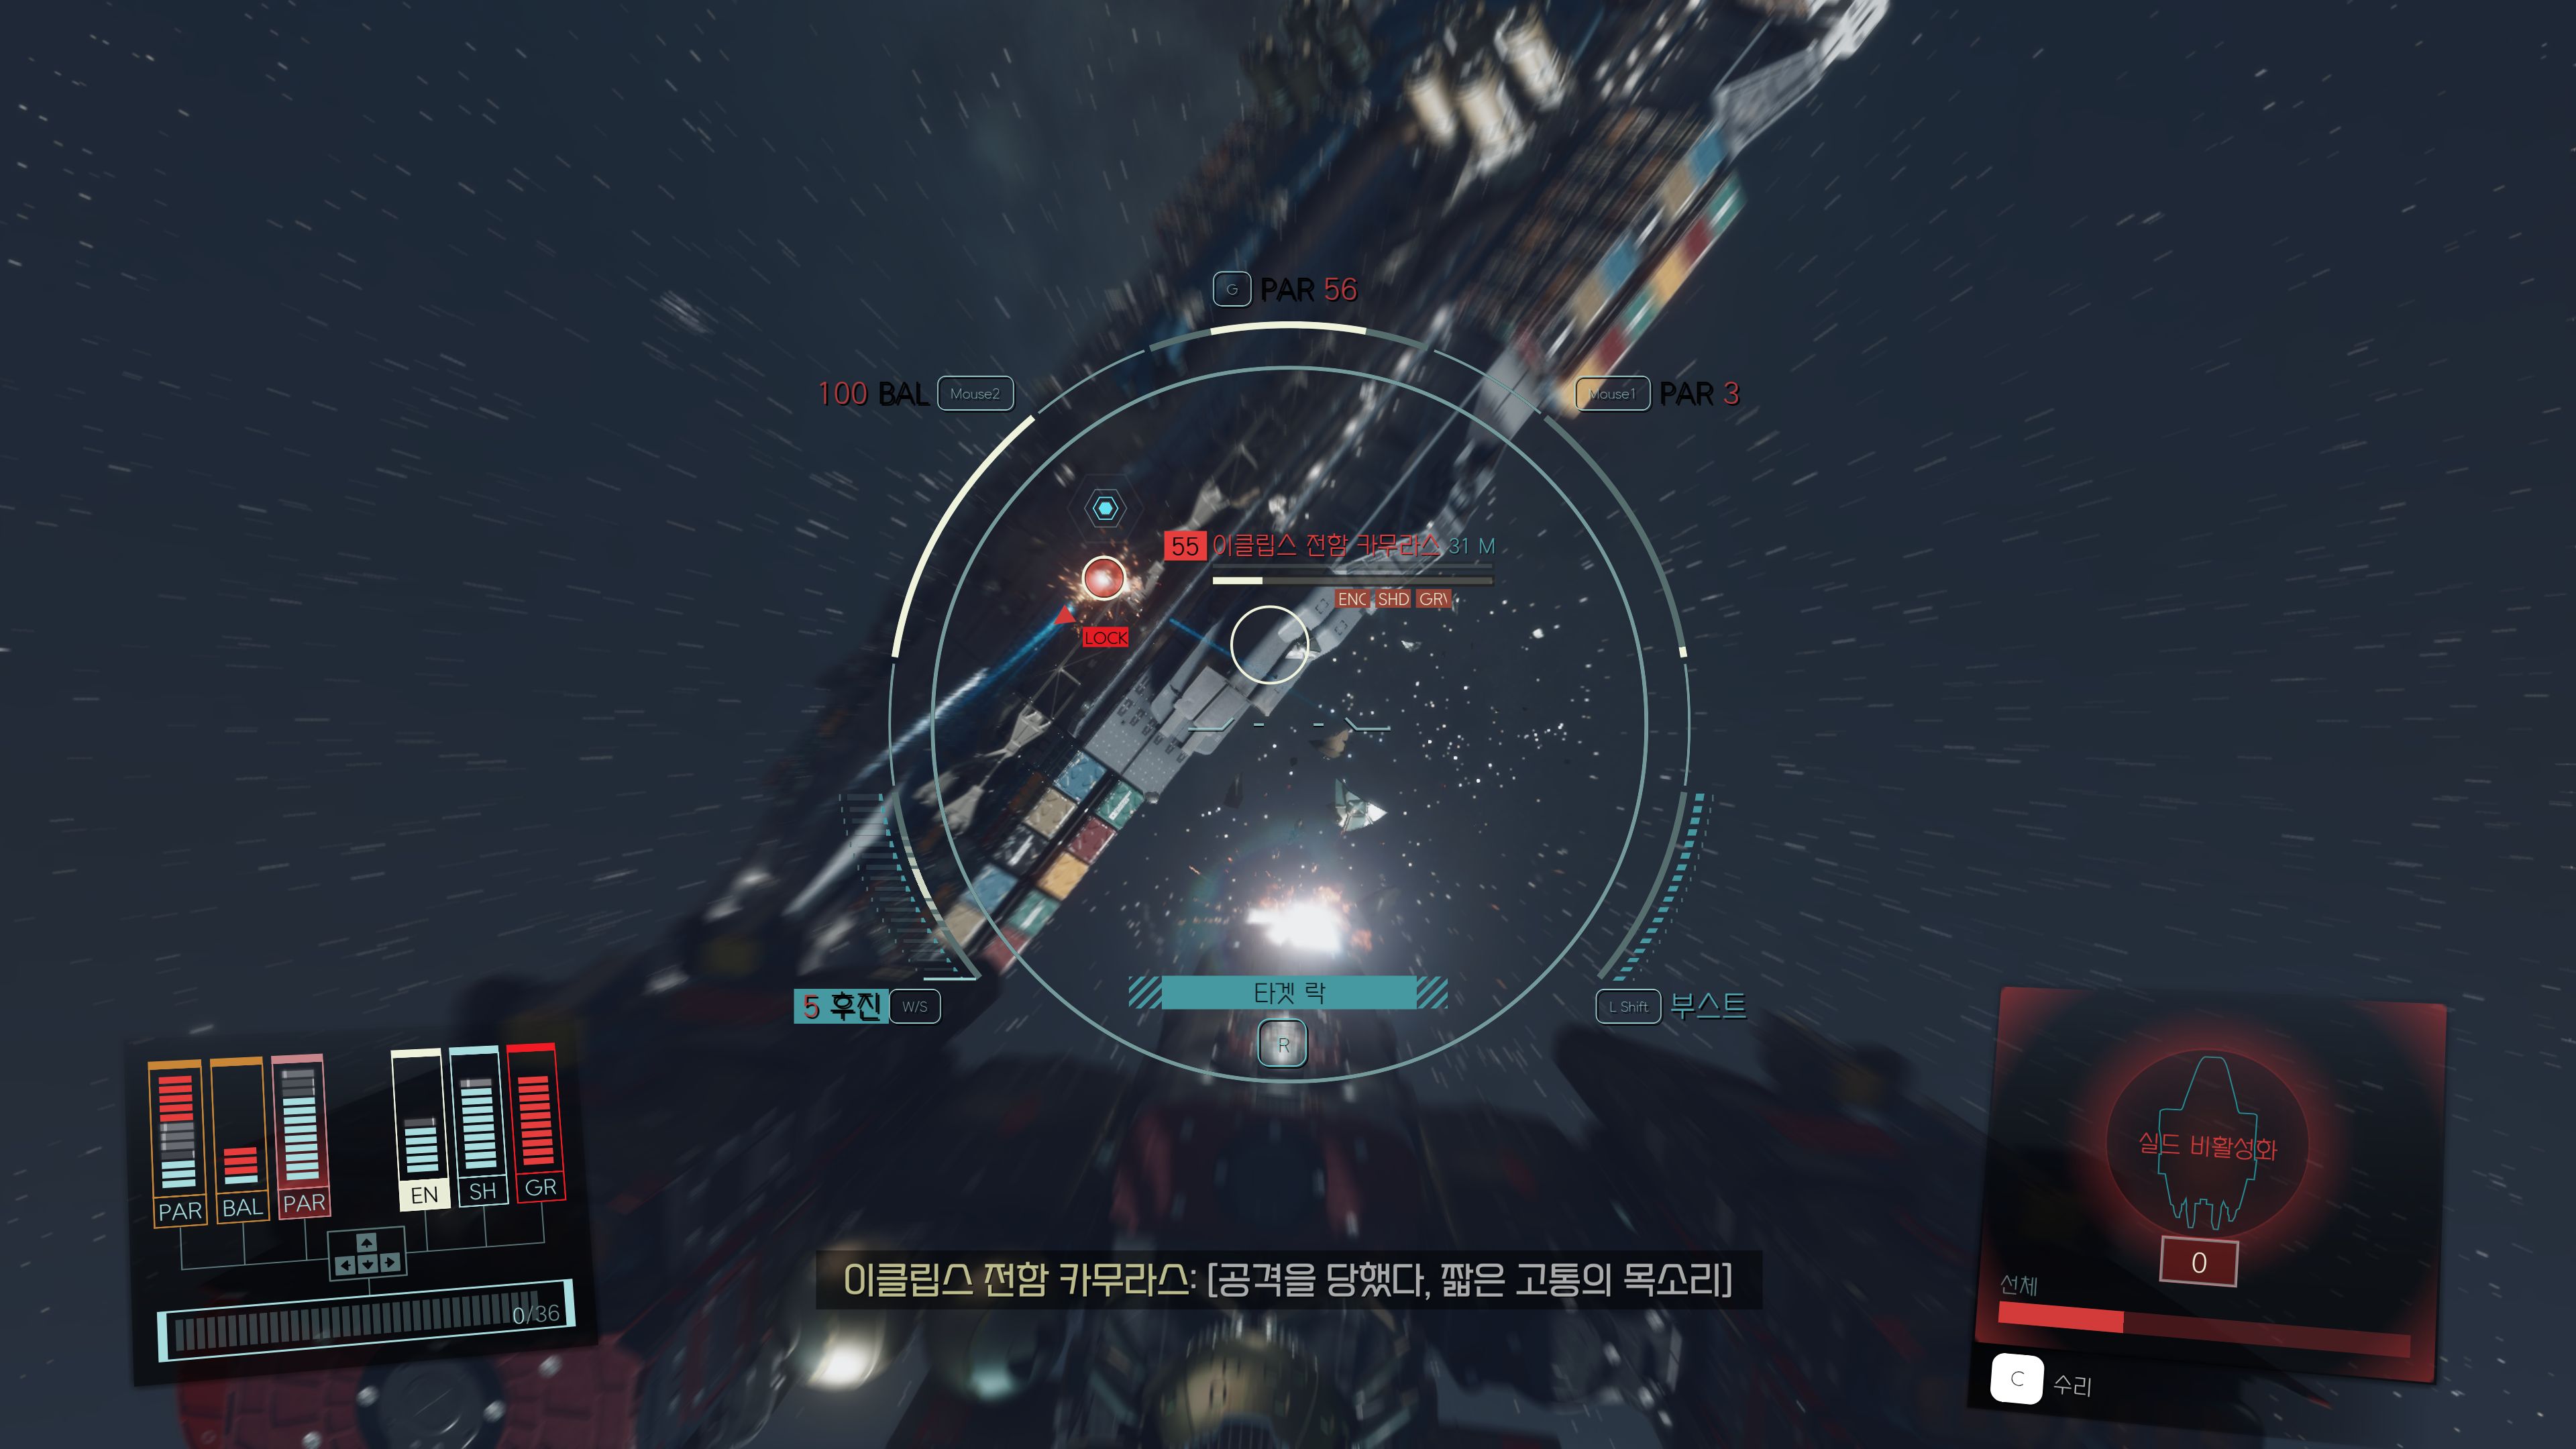 ecliptic_battleship_camulus12.jpg